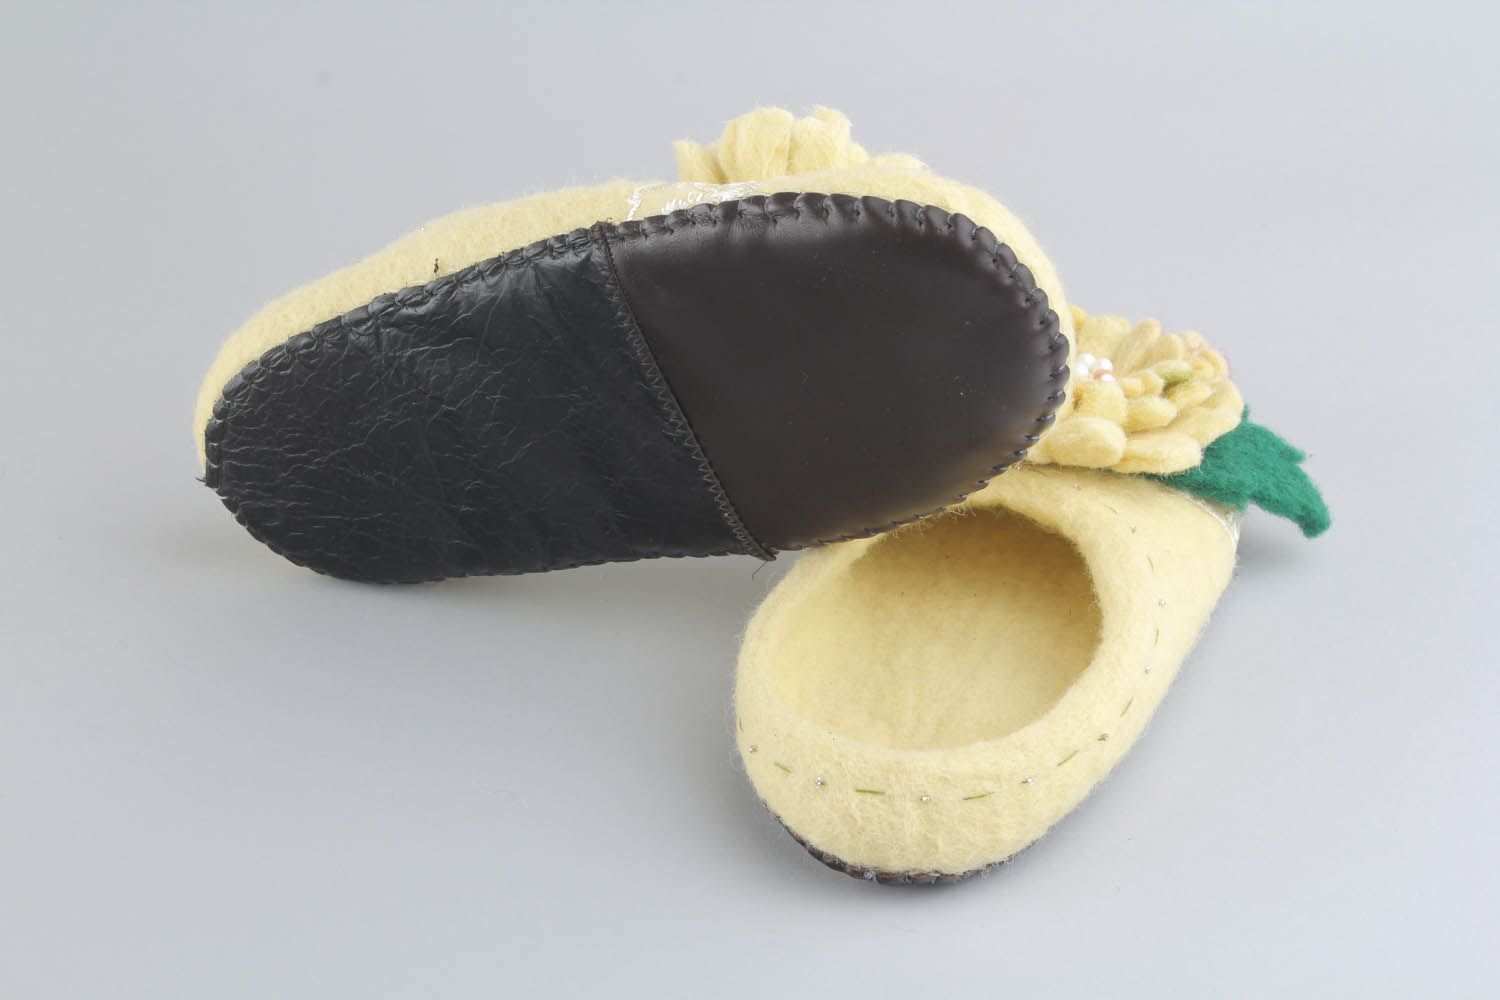 Woolen slippers photo 3